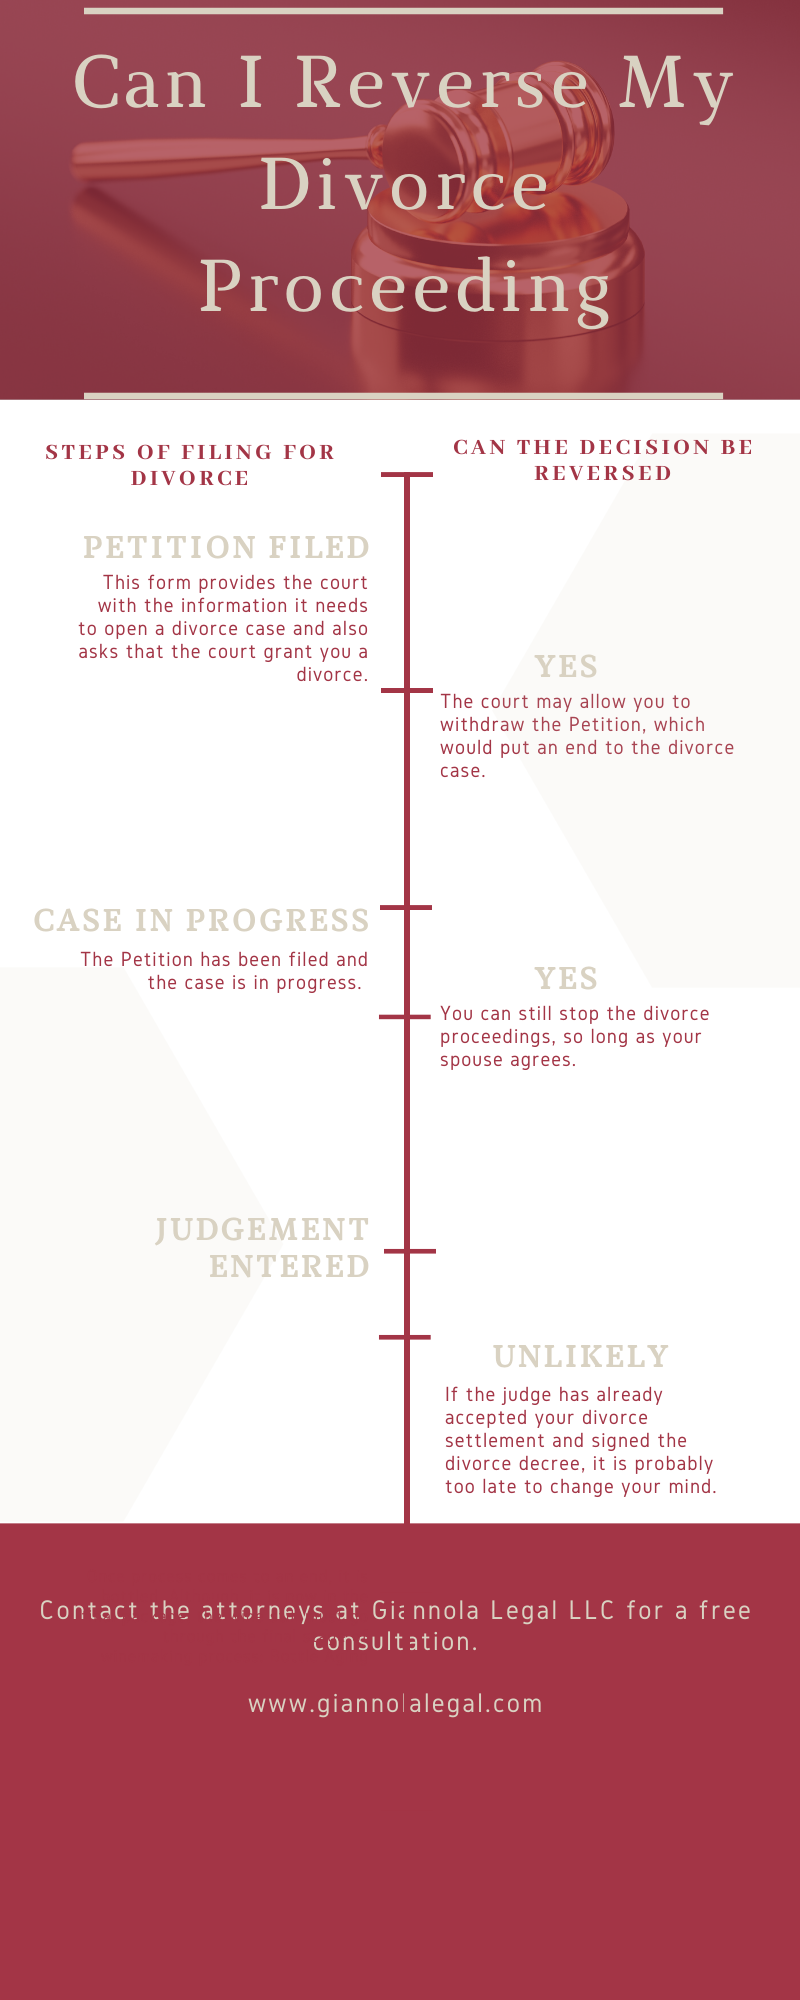 Divorce Proceeding infographic